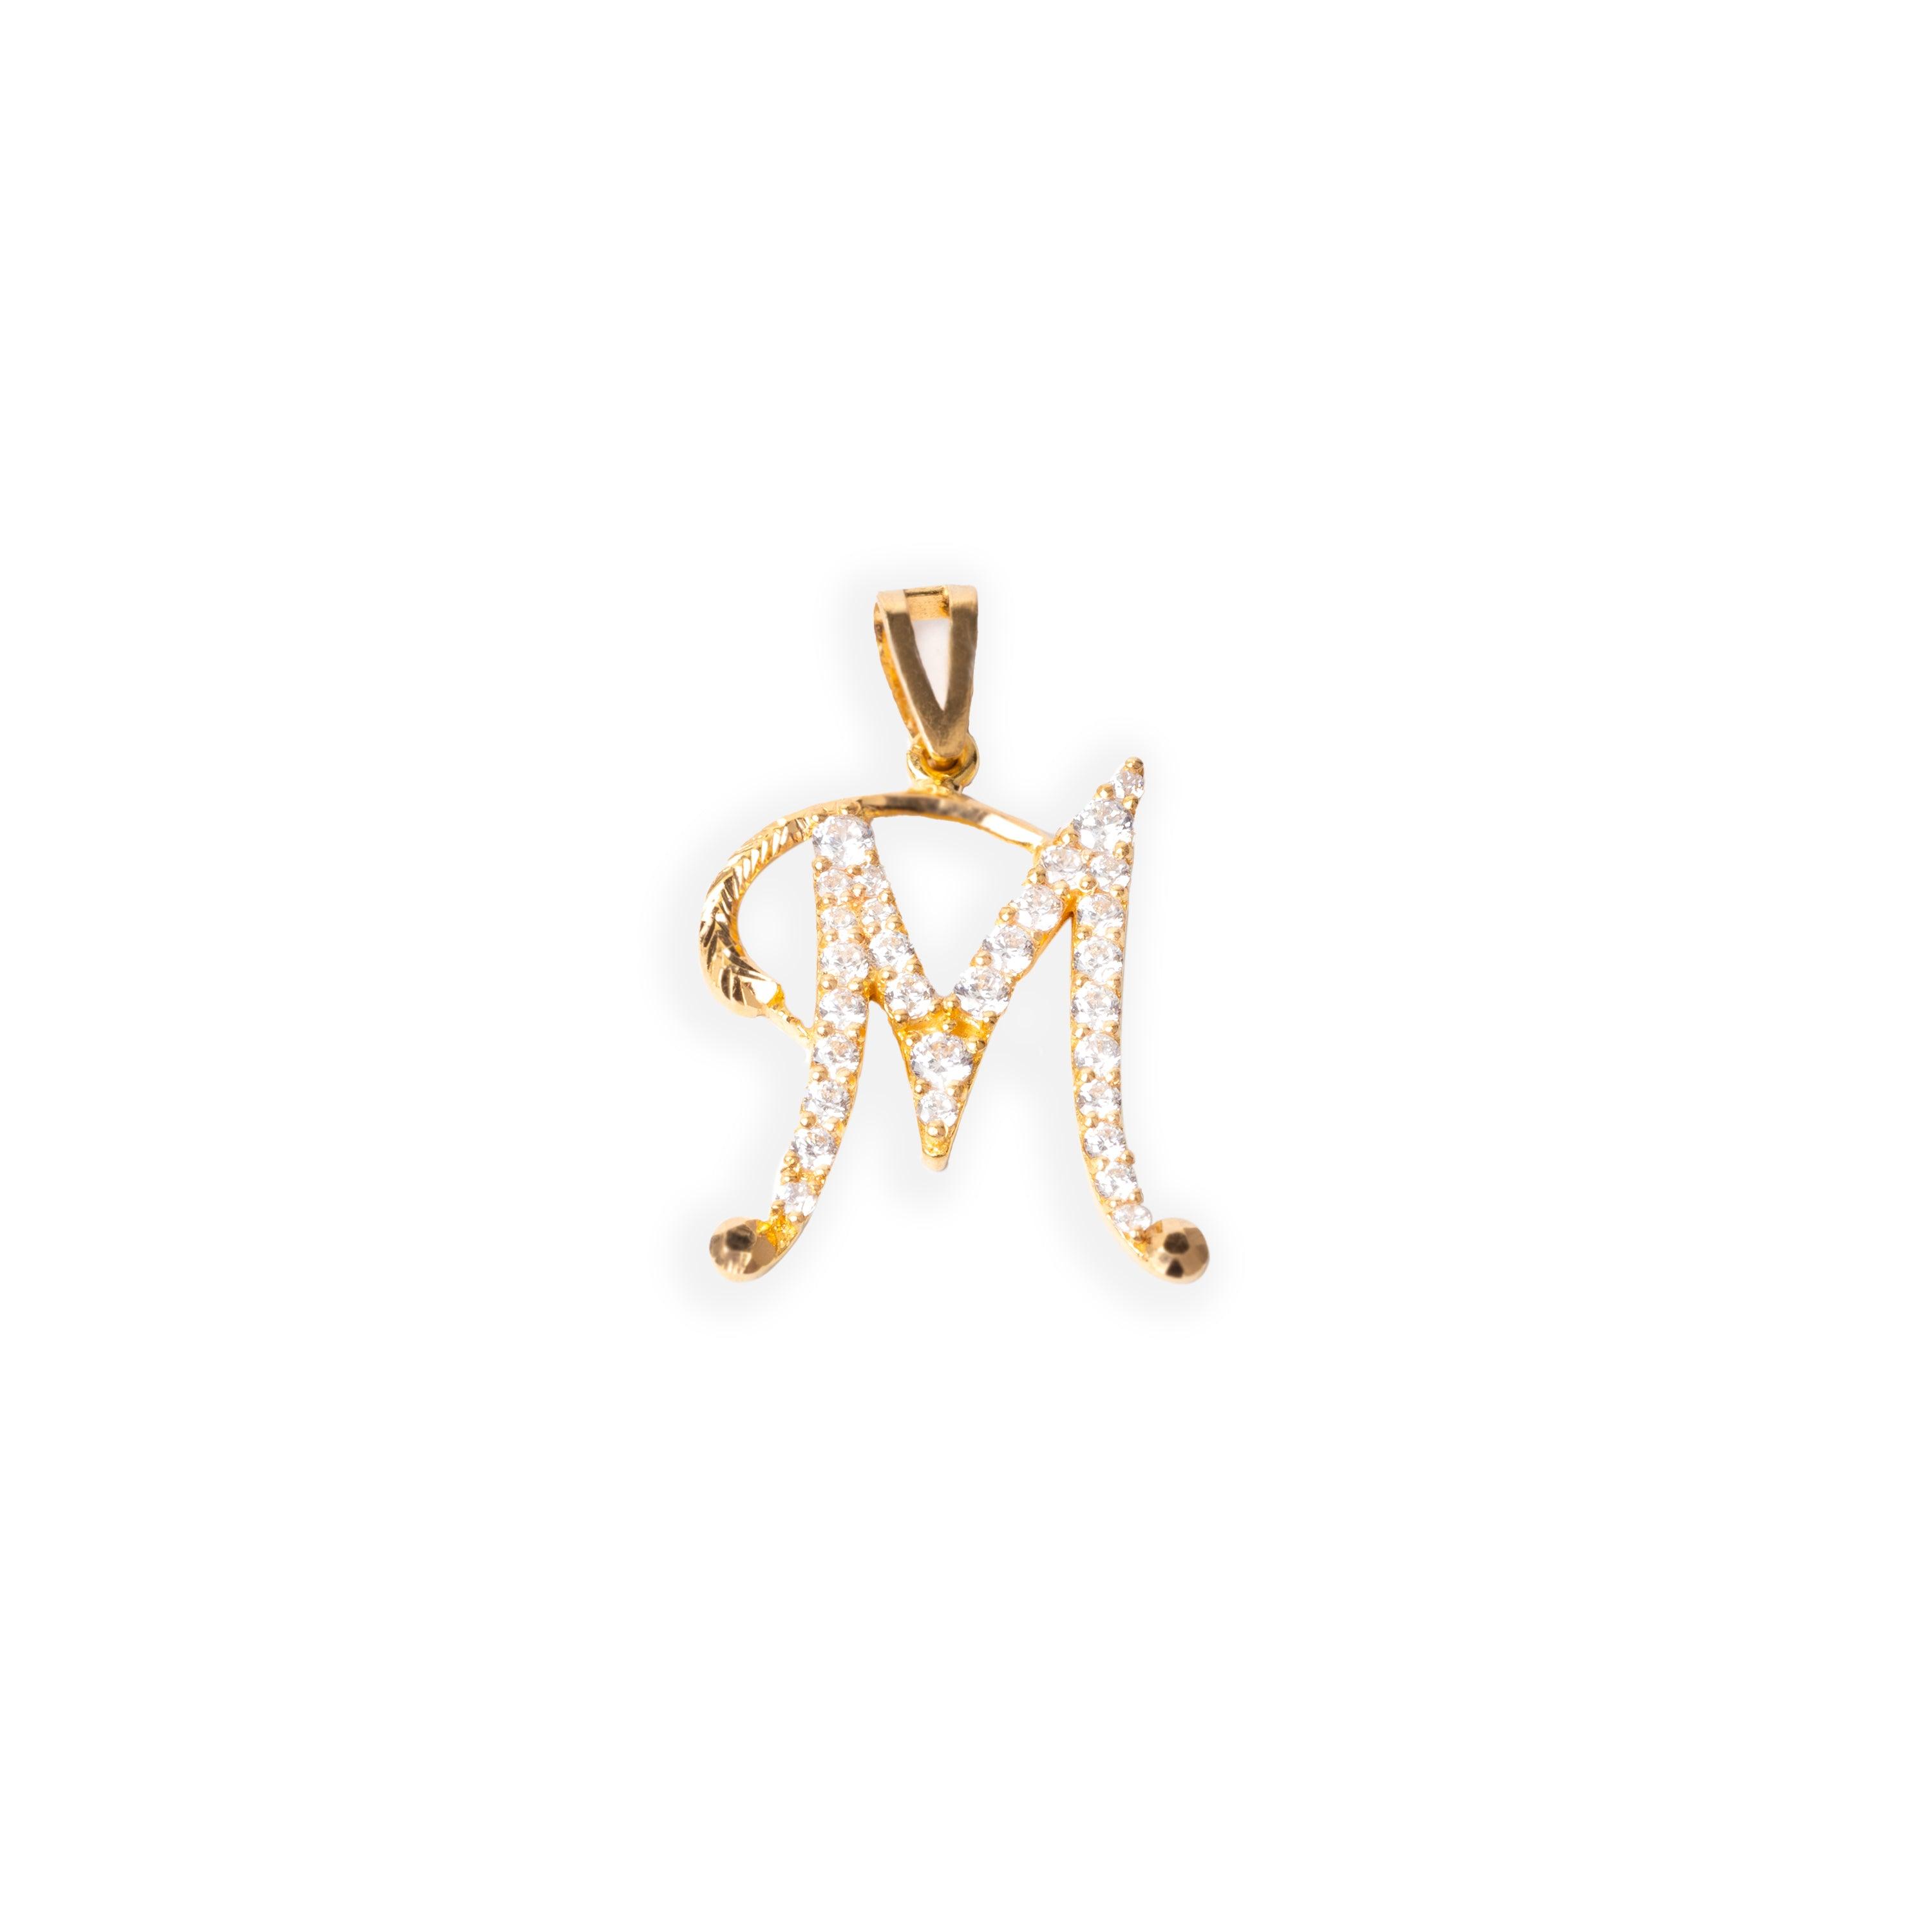 'M' 22ct Gold Initial Pendant with Cubic Zirconia Stones P-7039-M - Minar Jewellers